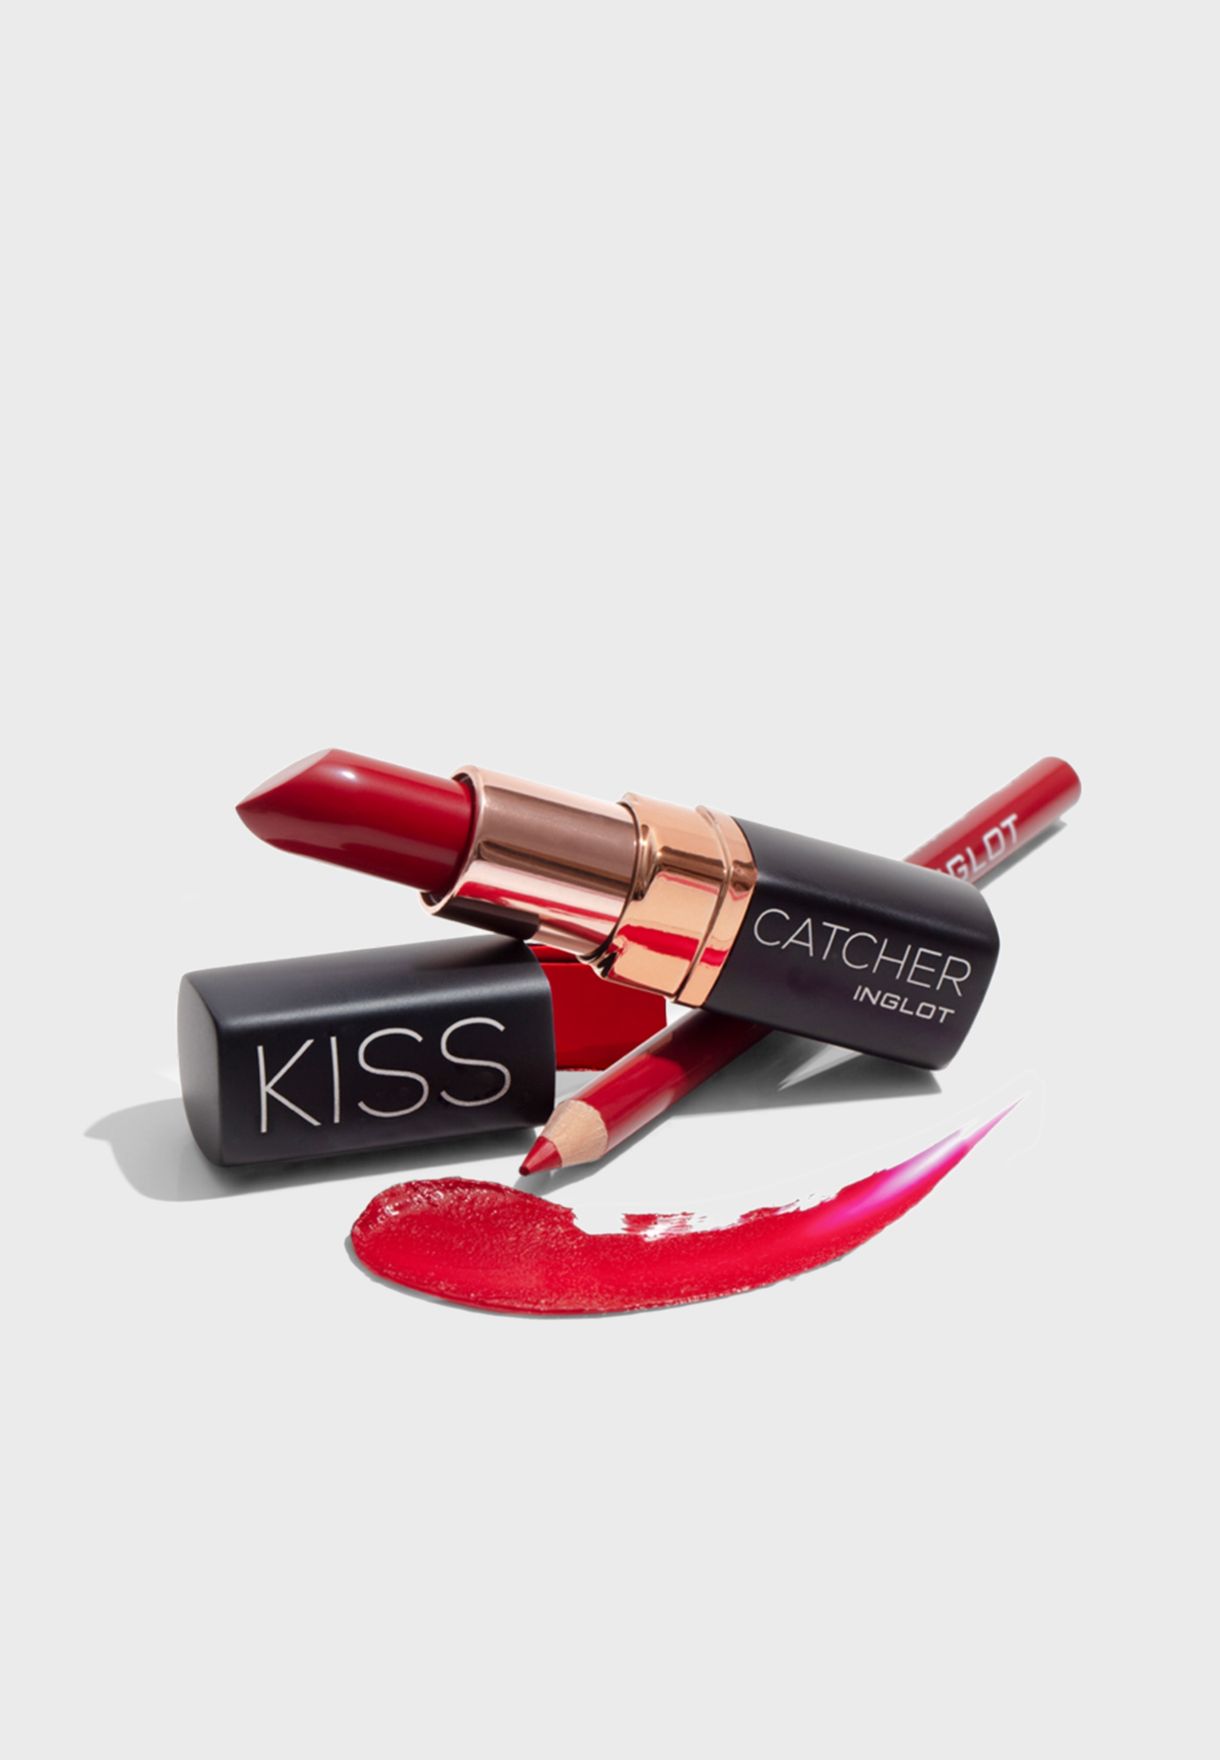 Kiss Catcher Lip Kit - Tango Kiss 35% Savings